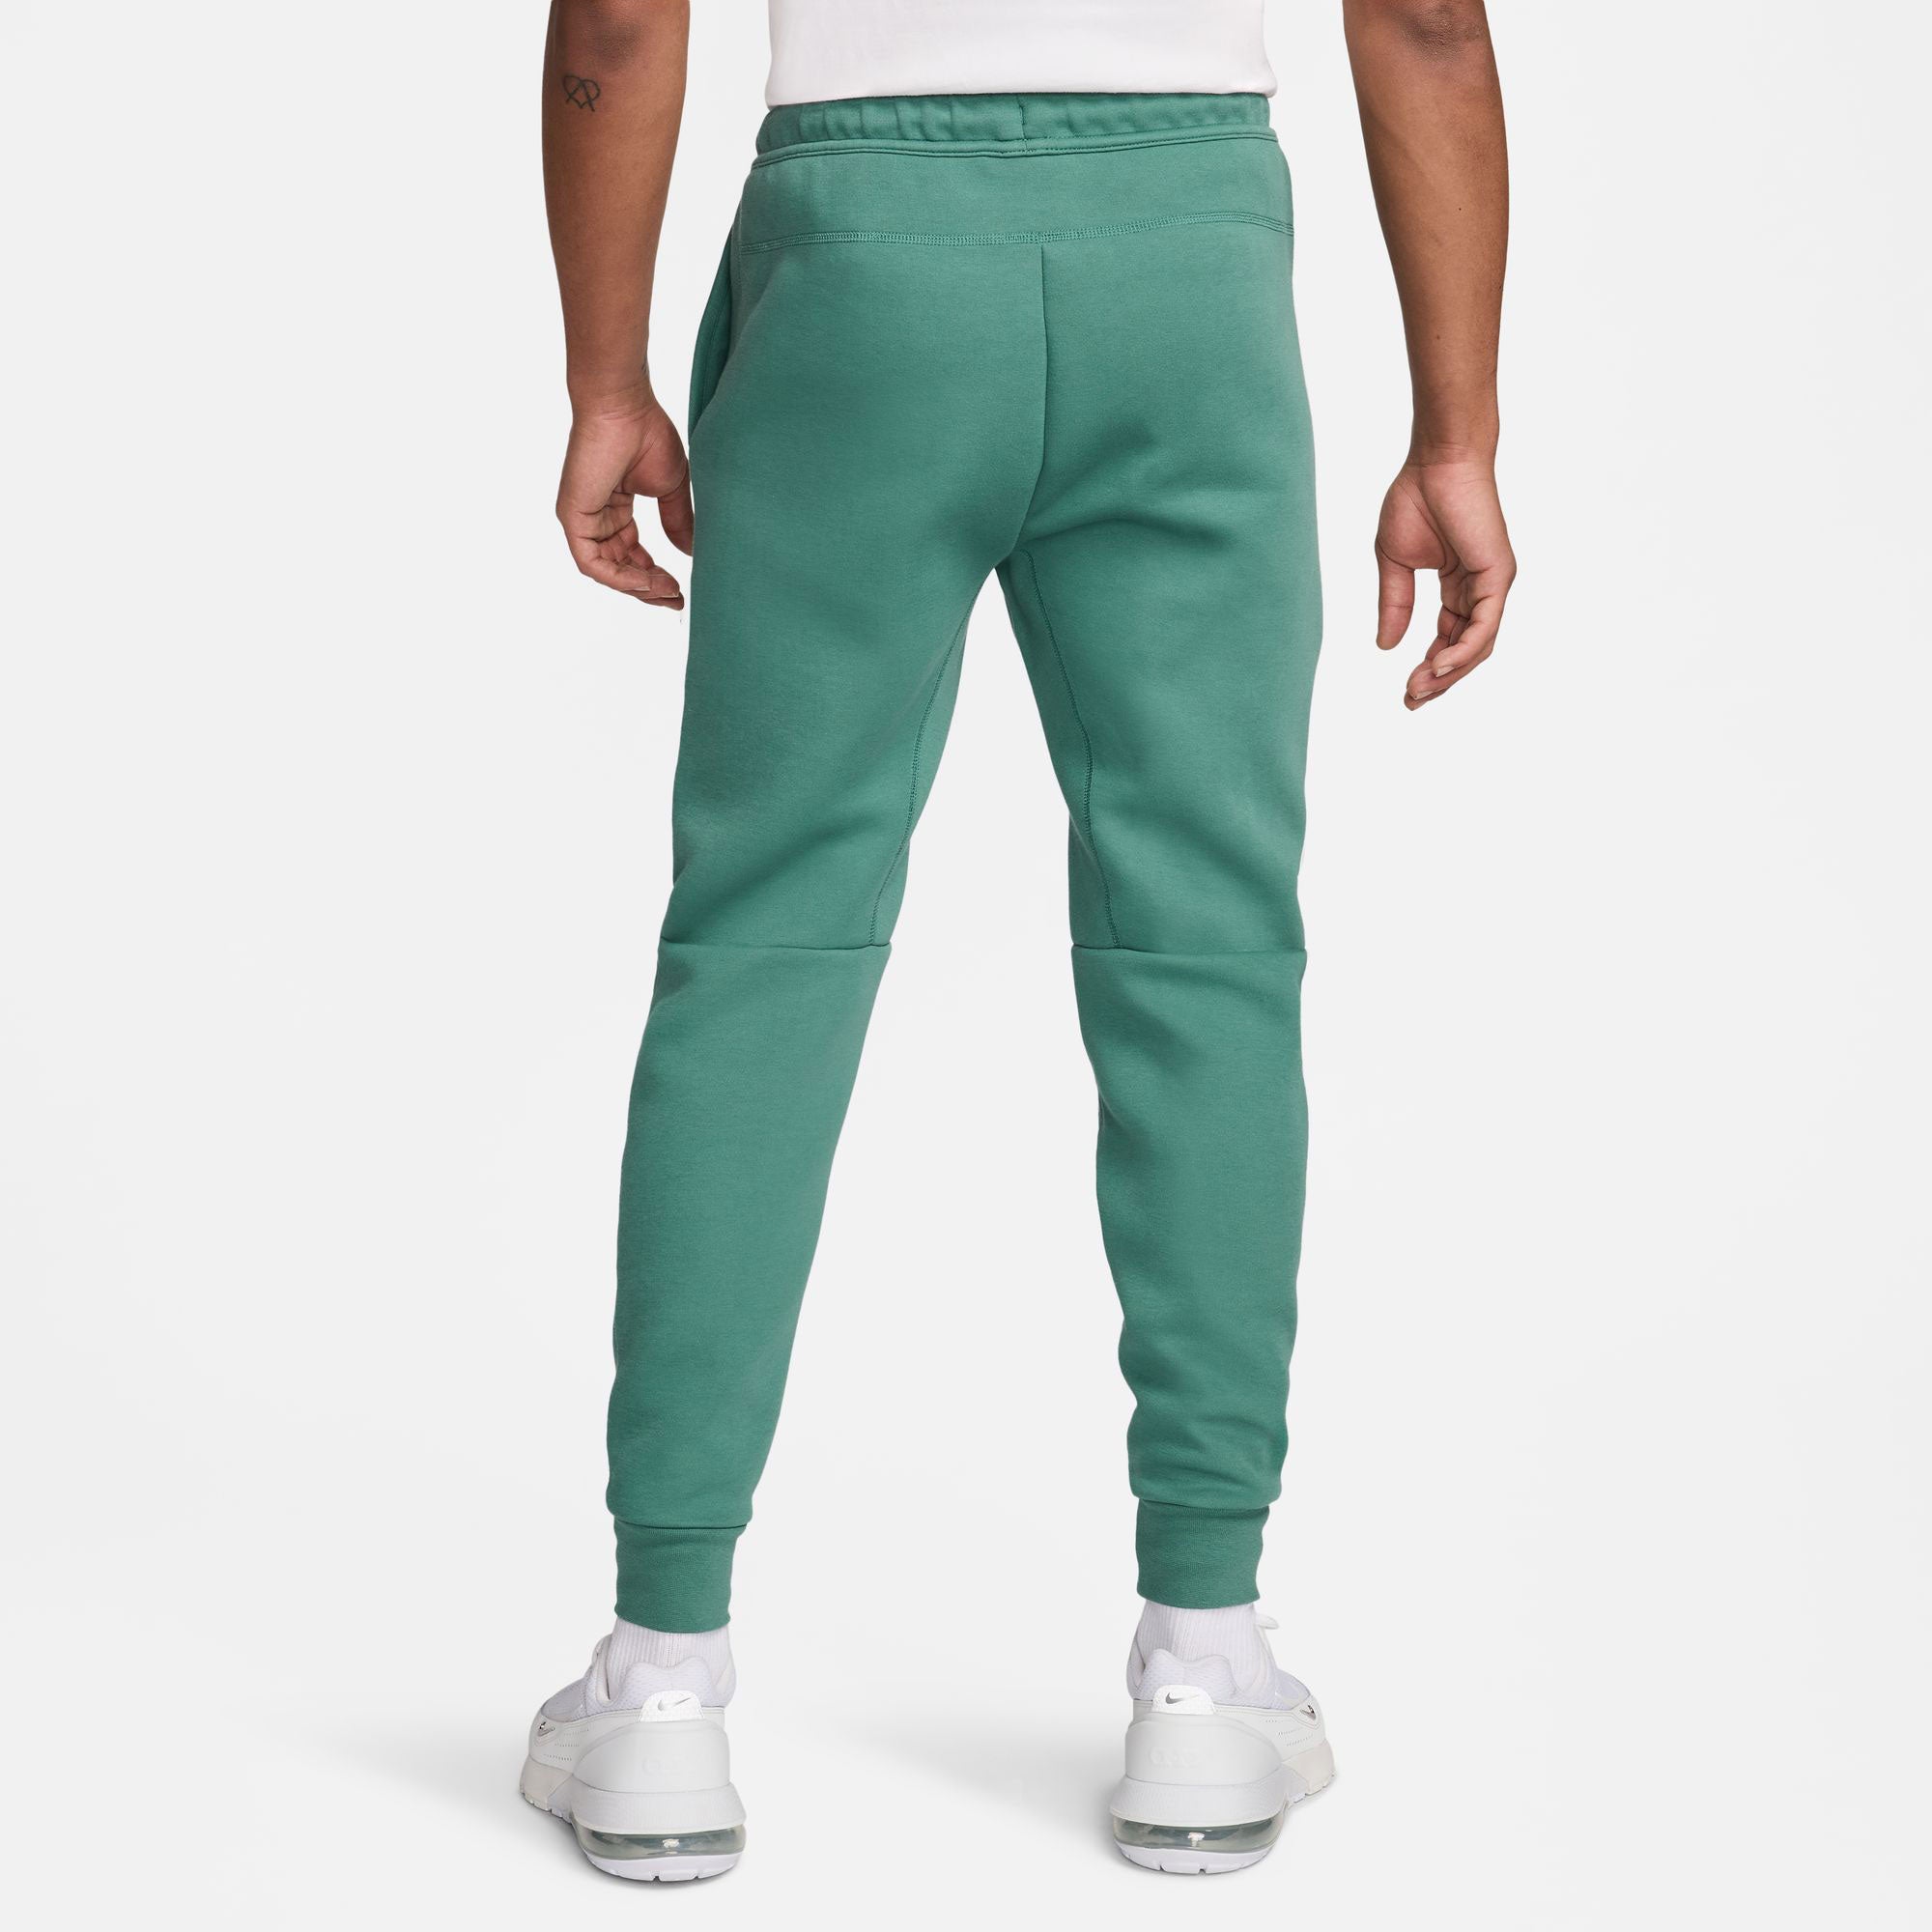 Nike Tech Fleece Men's Pants - Green (2)